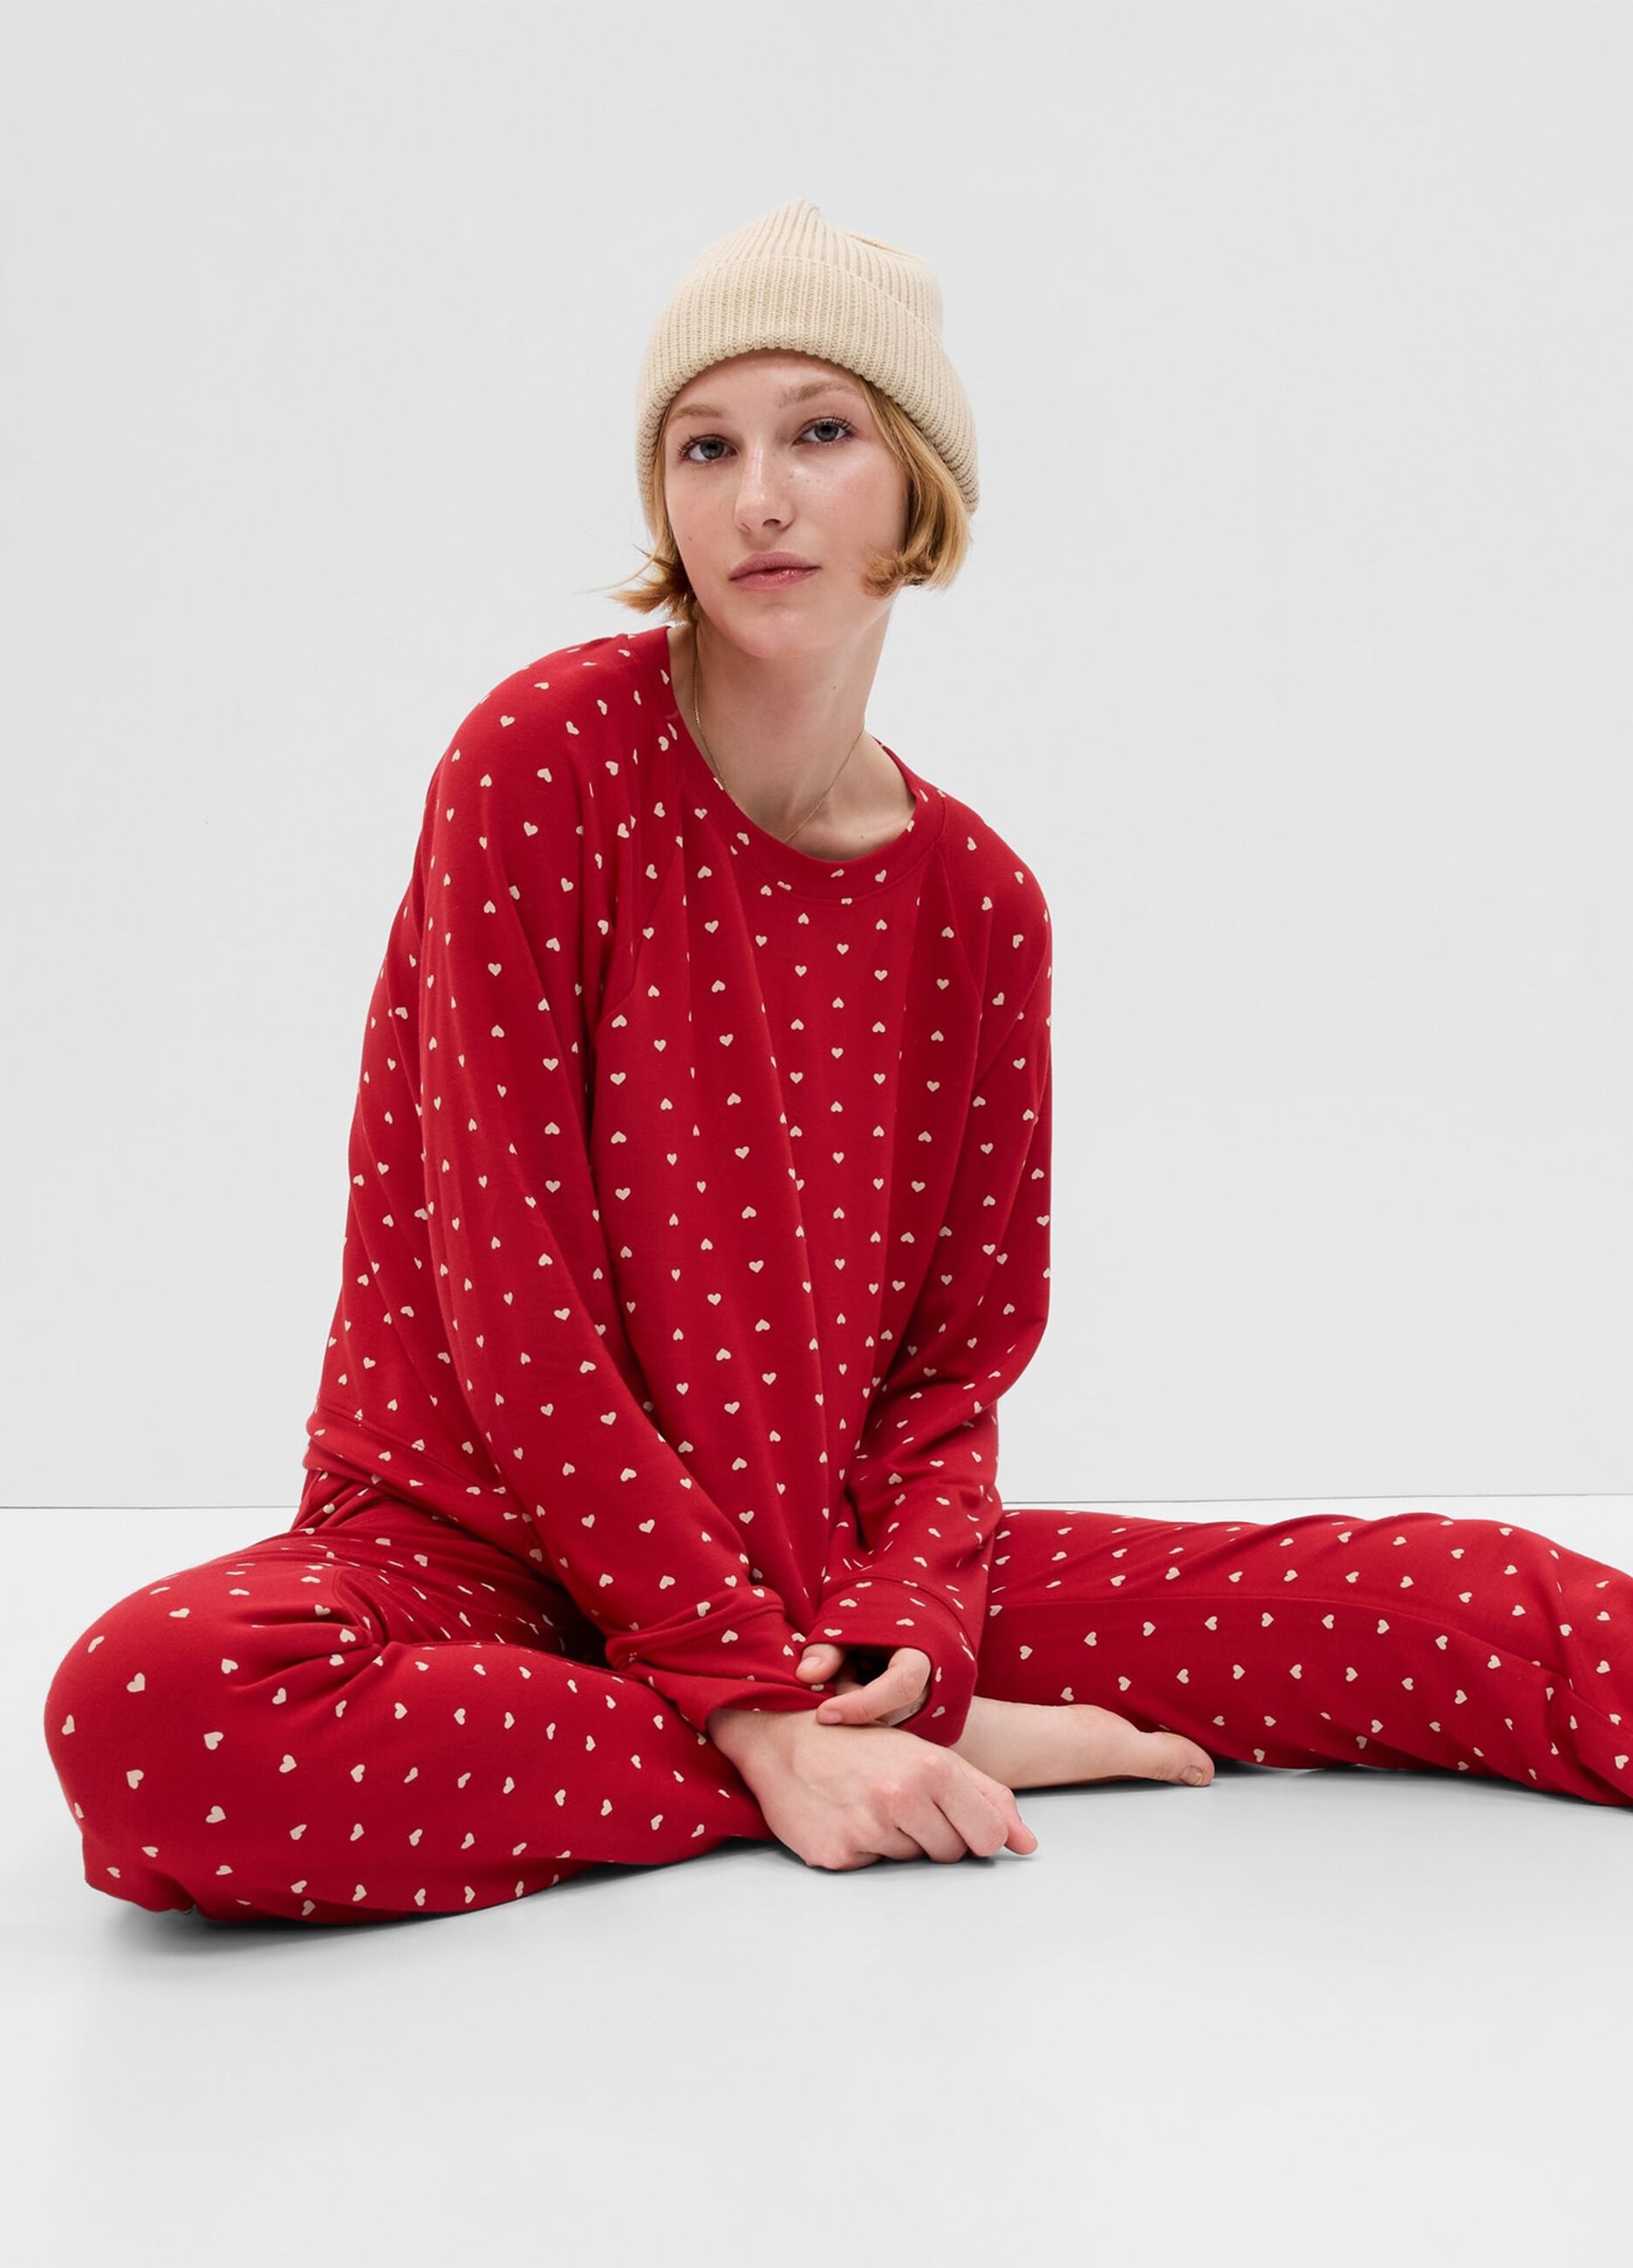 Pyjama top with hearts print